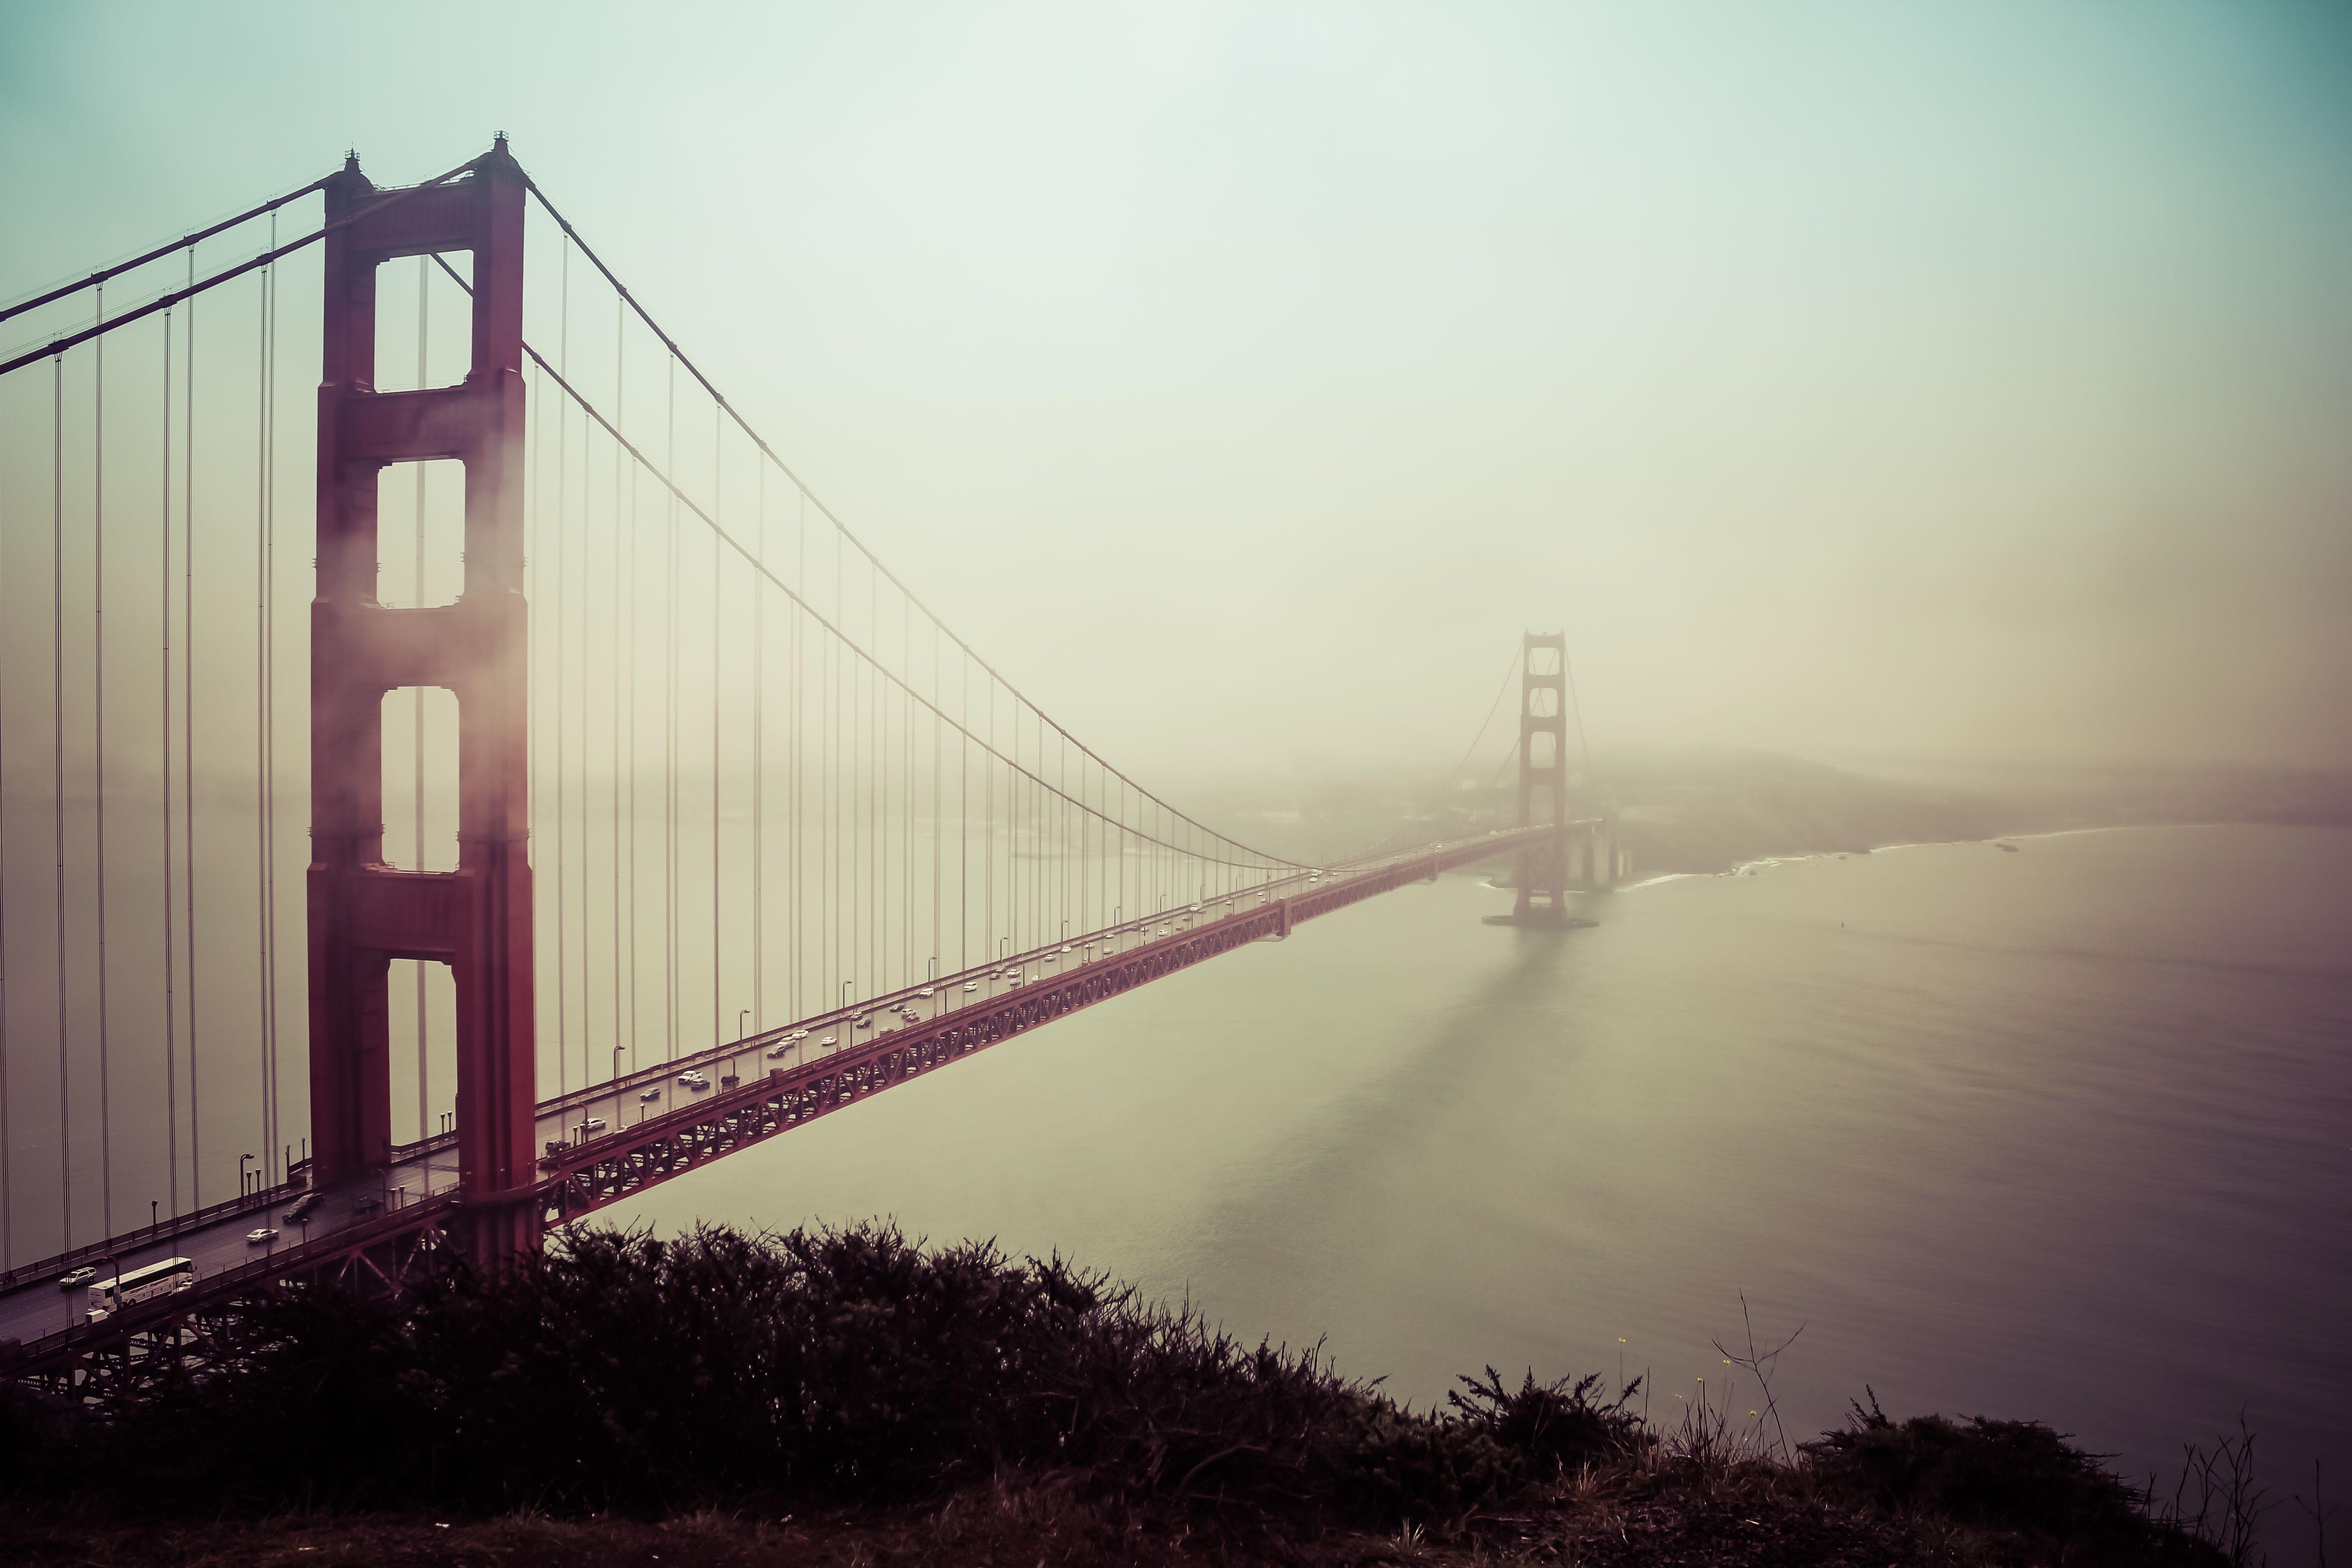 HD Wallpaper: Rainy day at the Golden Gate Bridge (Marin)